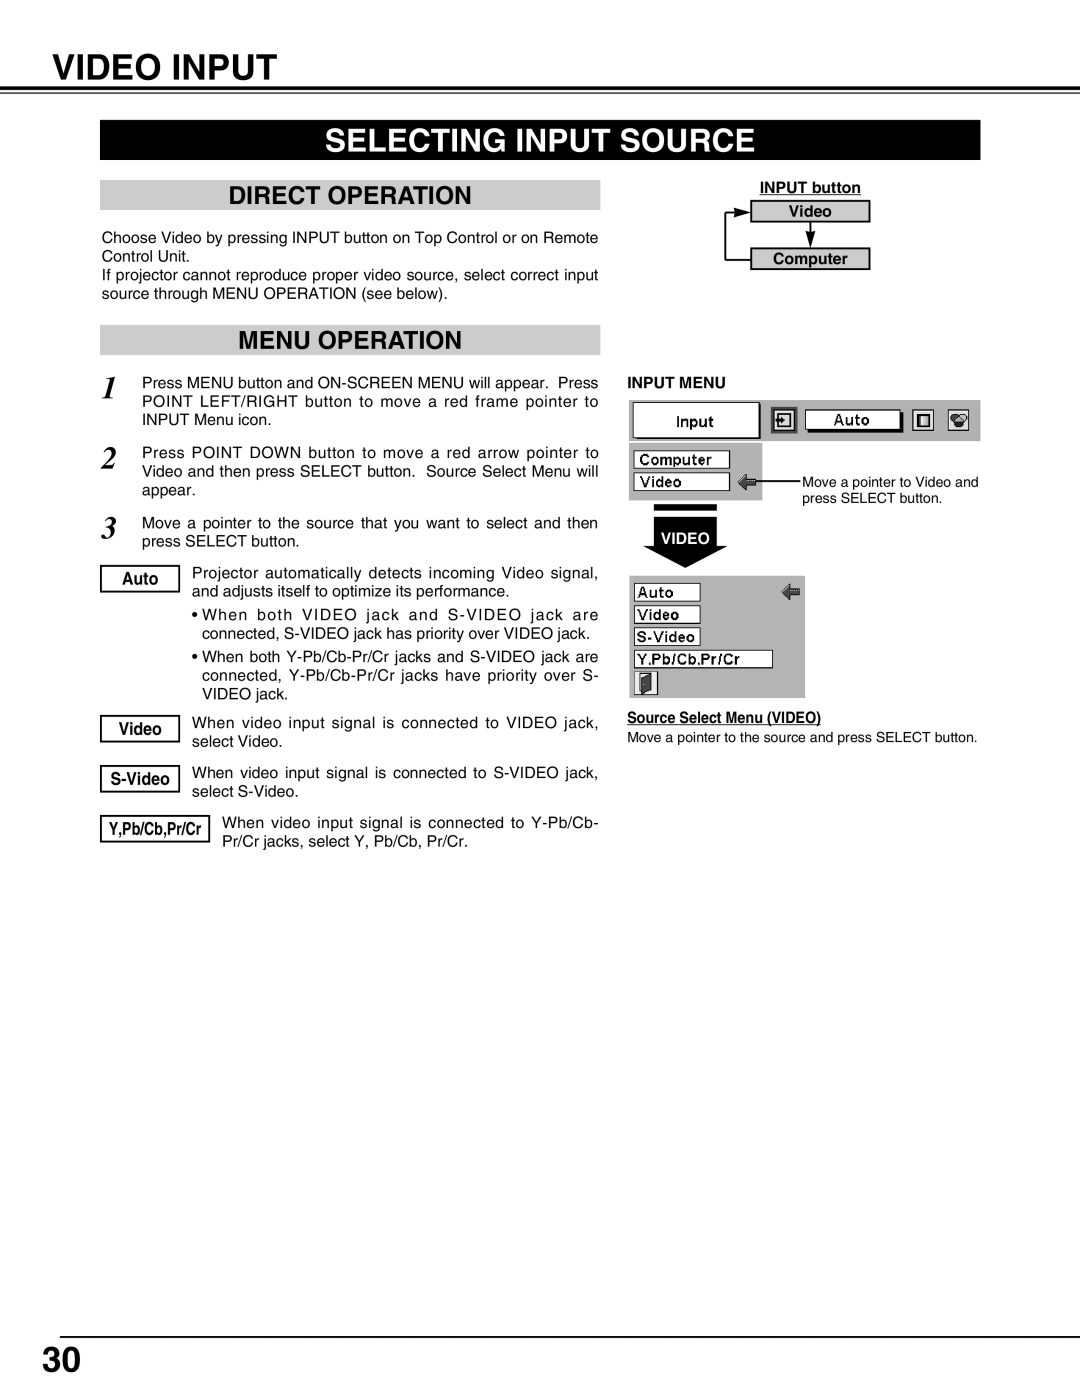 BOXLIGHT cp-305t manual Video Input, Selecting Input Source, Direct Operation, Menu Operation, INPUT button Video Computer 